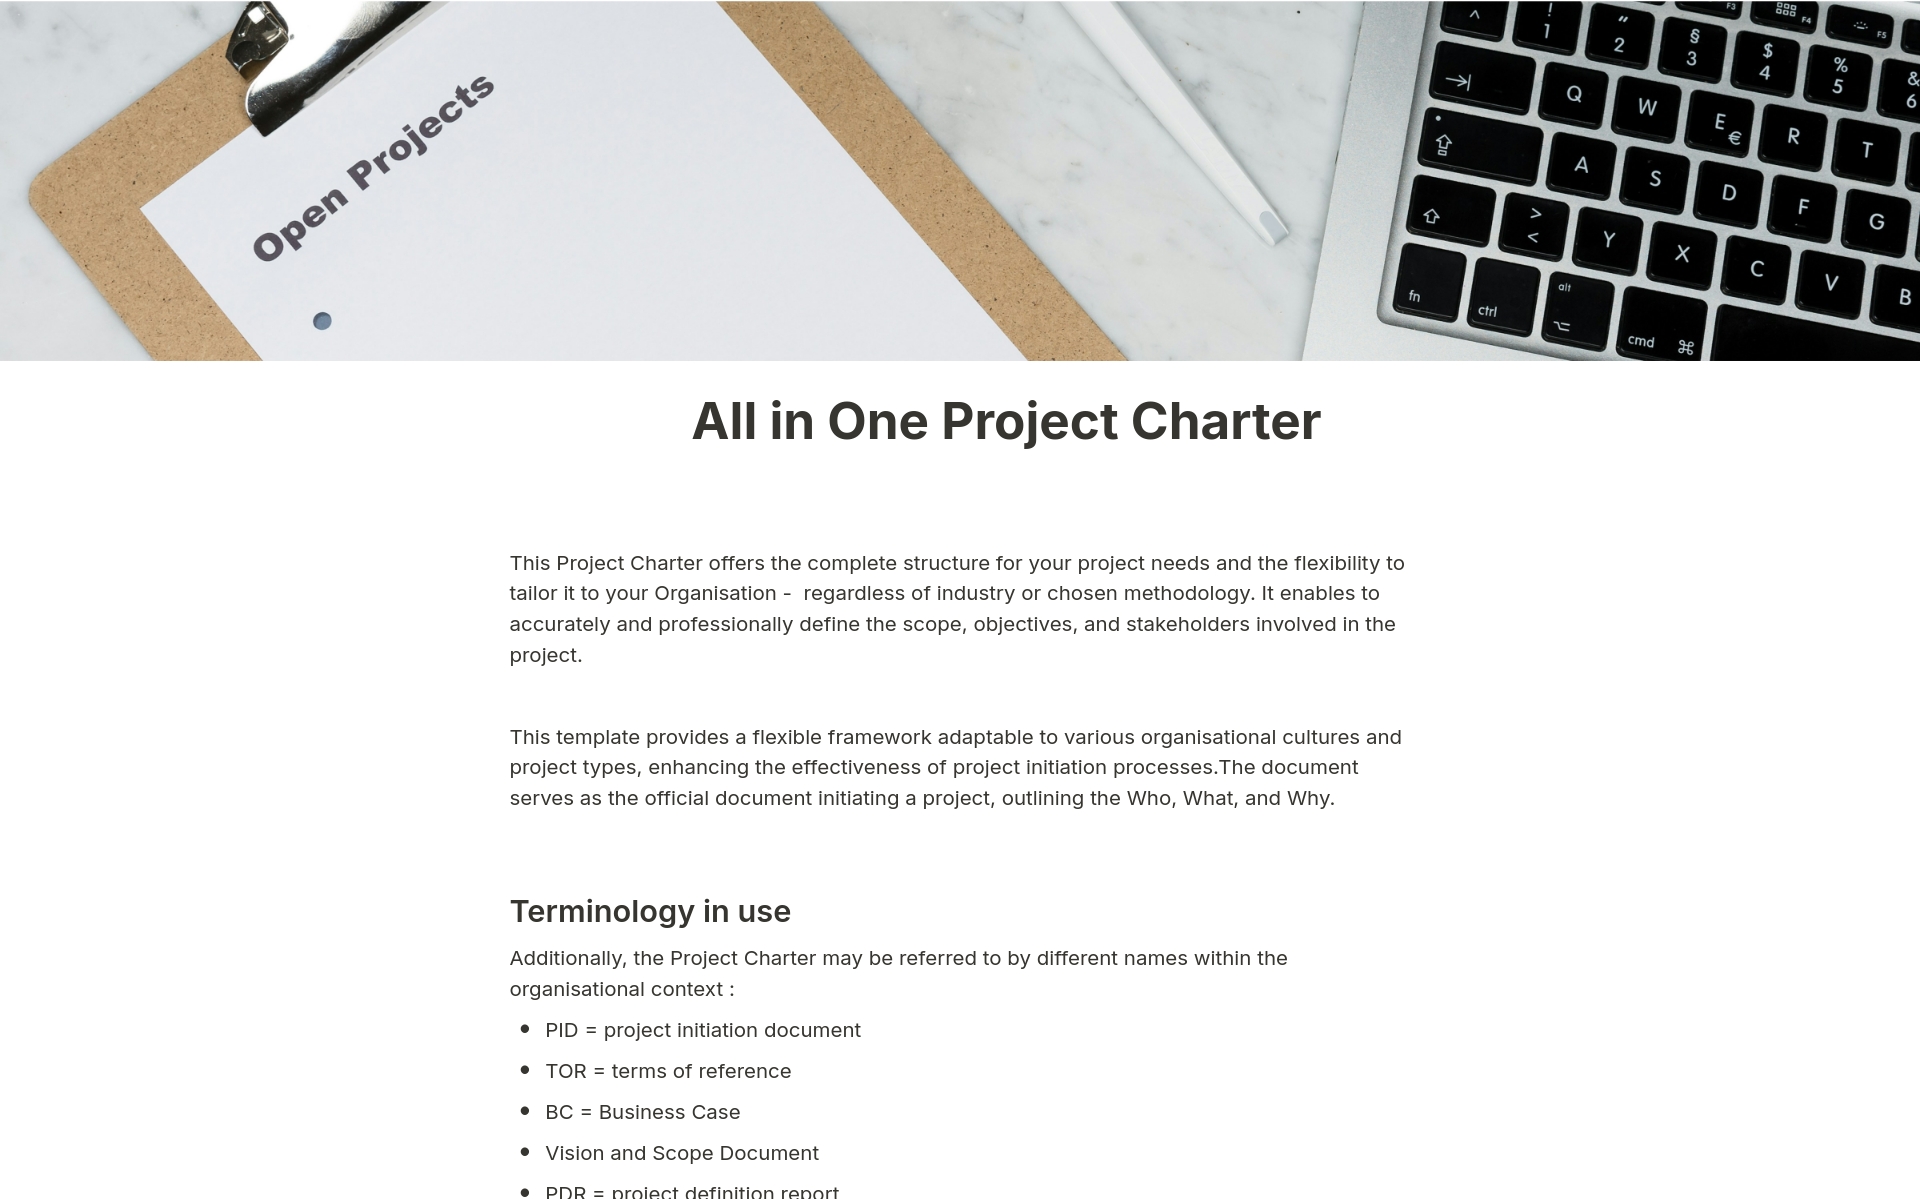 Vista previa de una plantilla para All in One Project Charter